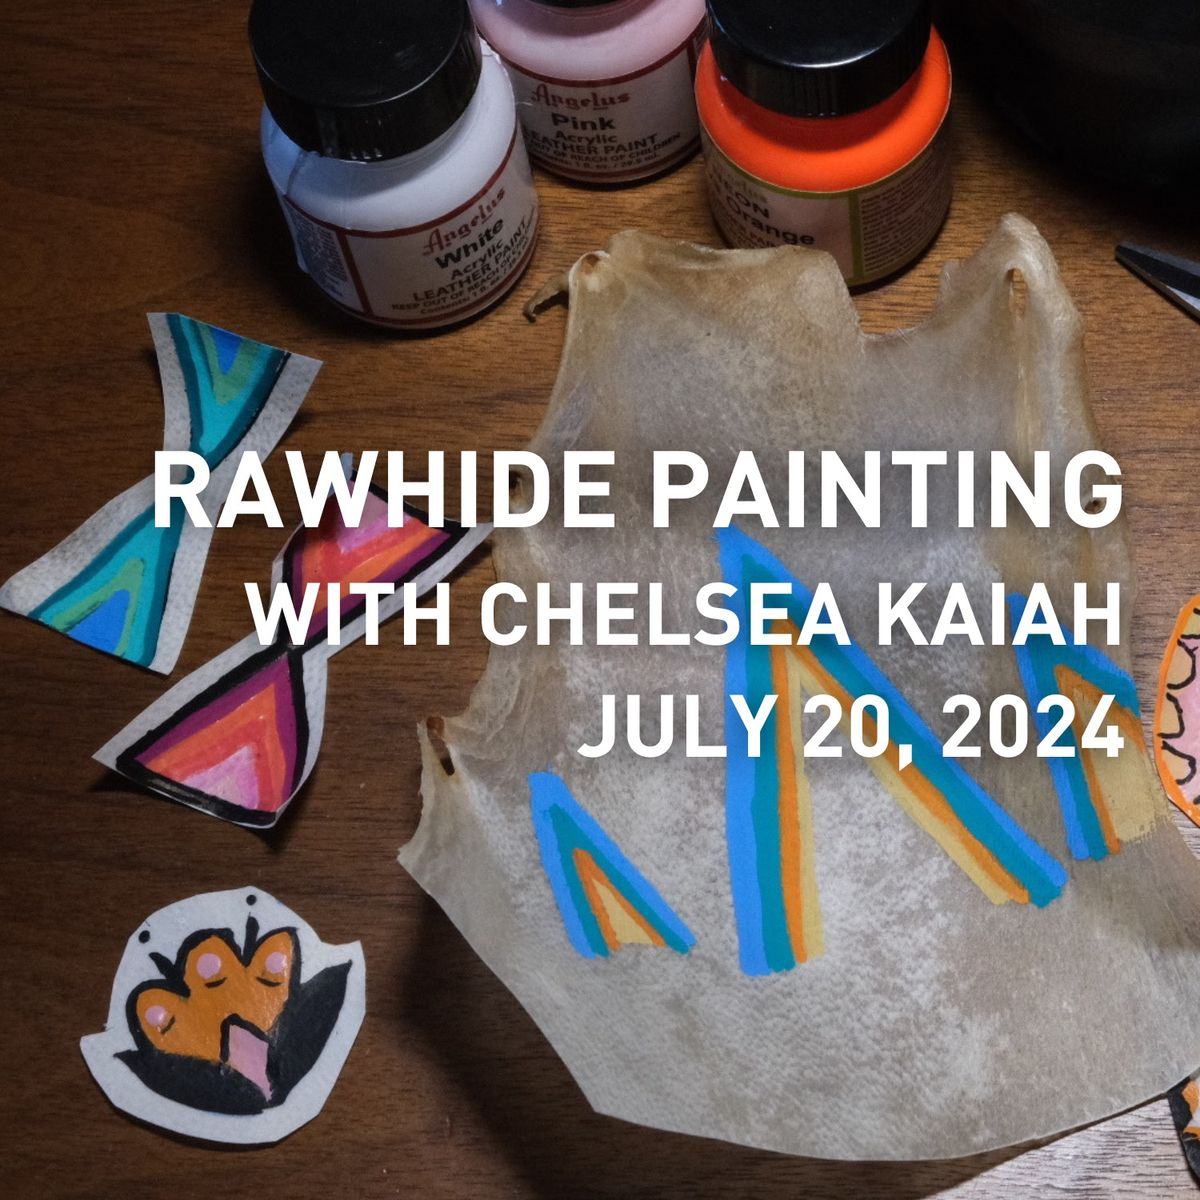 Rawhide Painting with Chelsea Kaiah